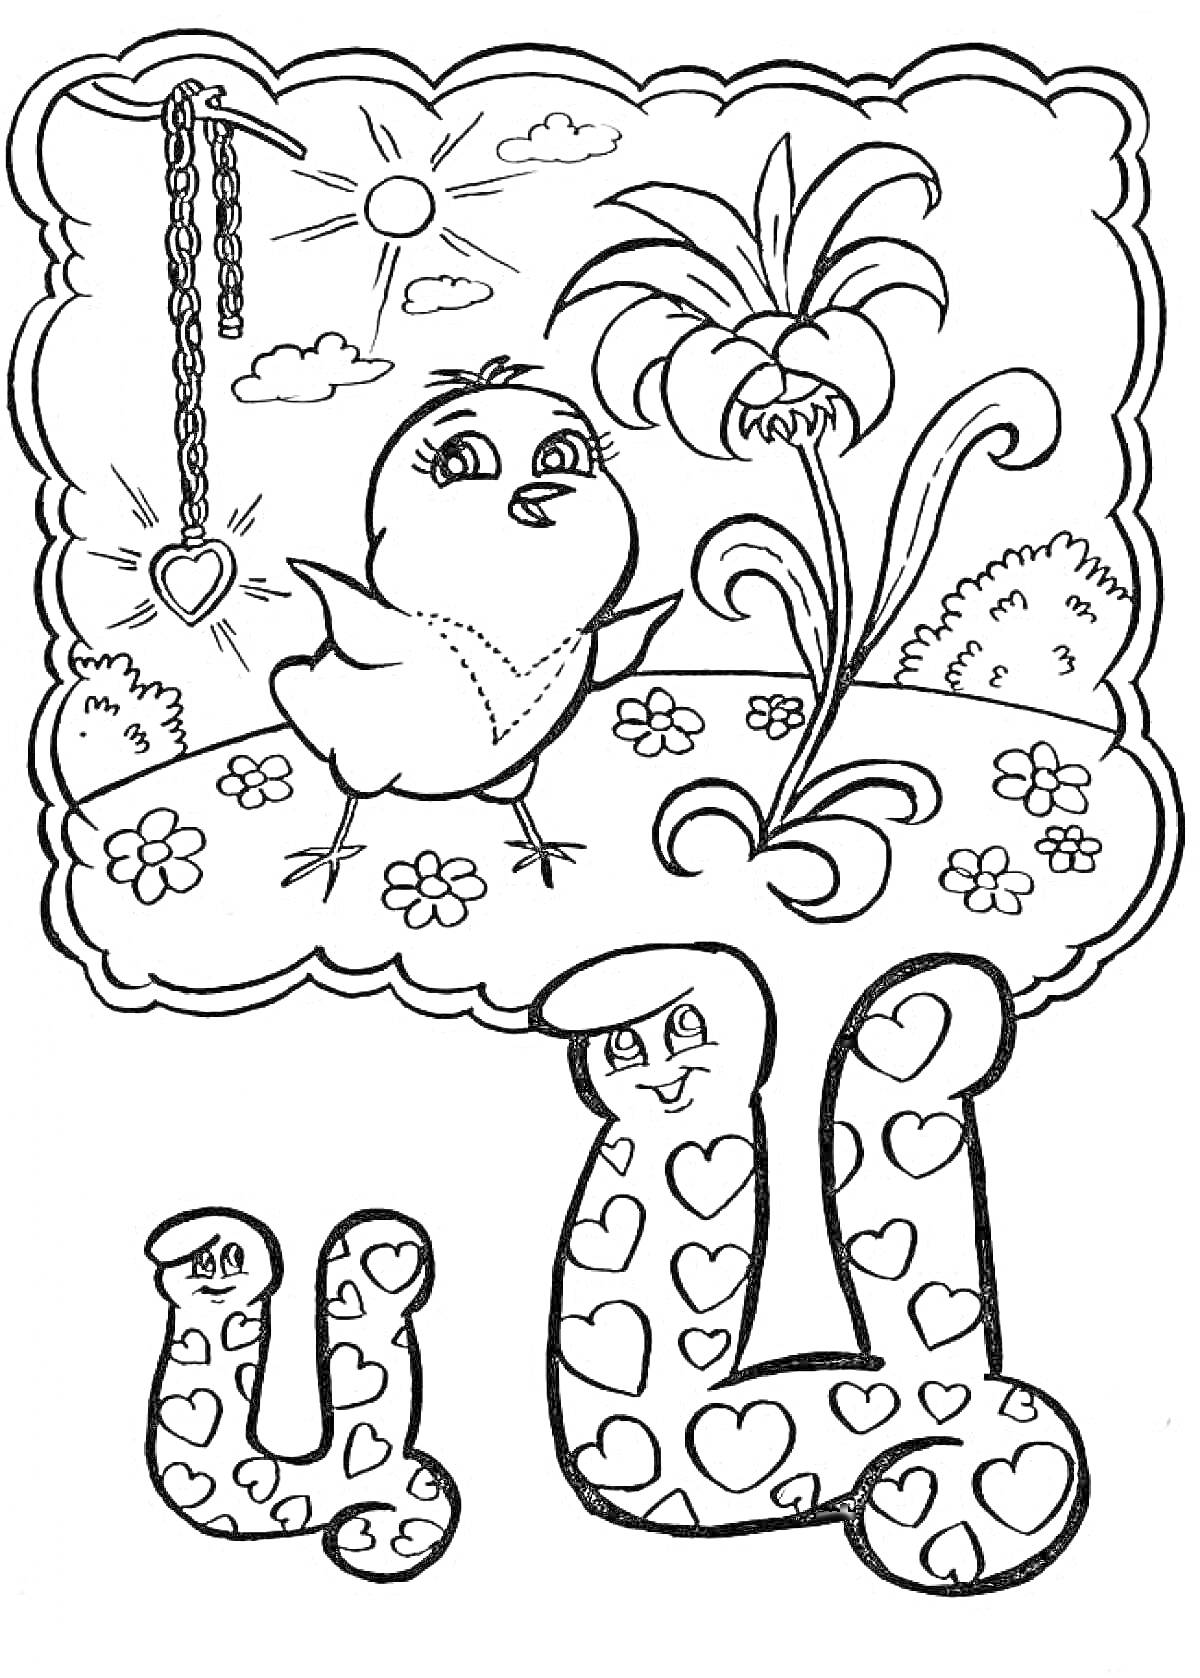 На раскраске изображено: Буква Ц, Цыплёнок, Цепочка, Сердечко, Солнце, Облака, Трава, Цветы